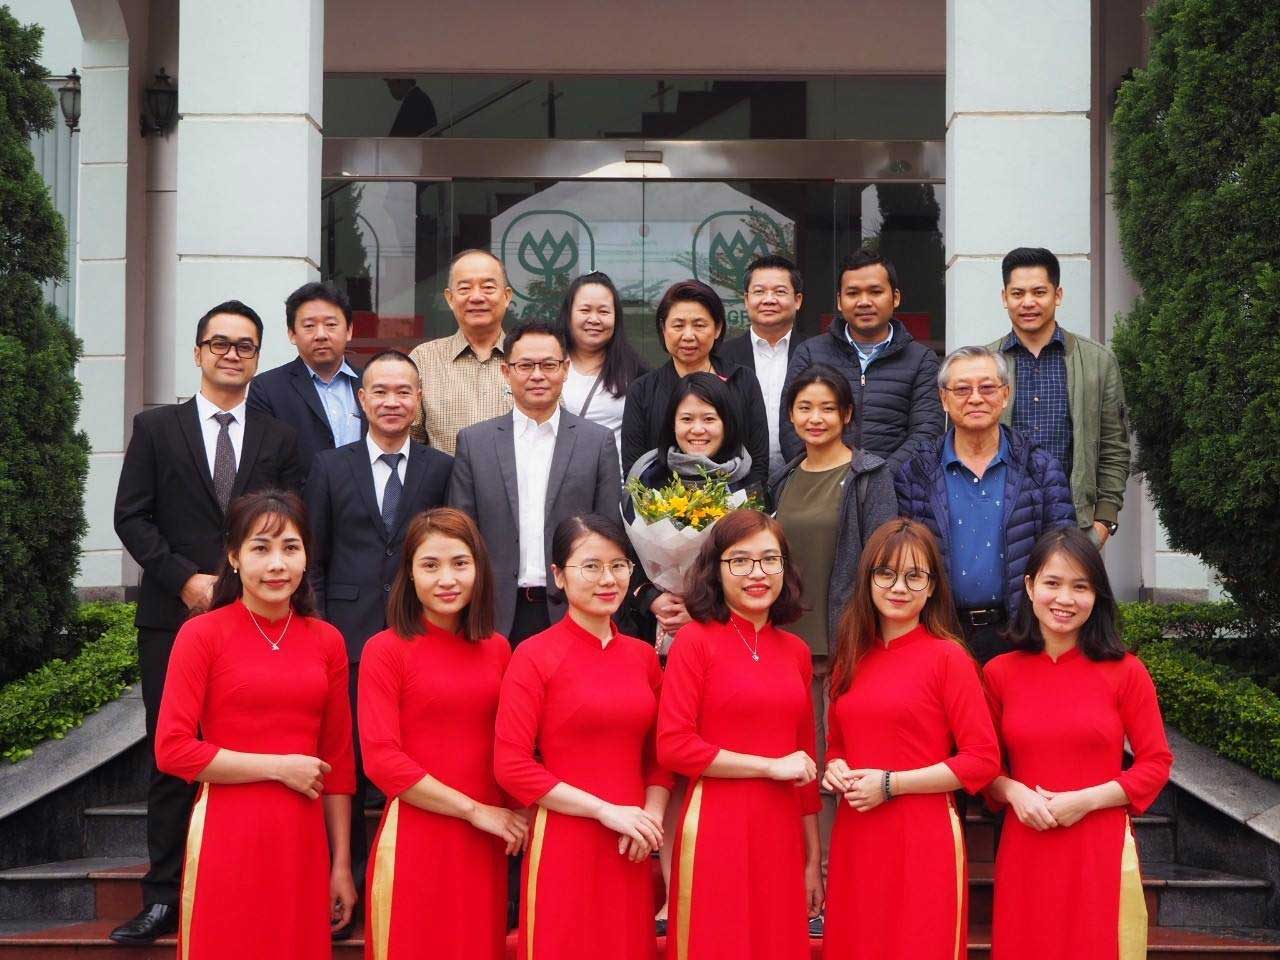 Royal Embassy led Thai investors and press to visit CP Vietnam's operation and CSR programs